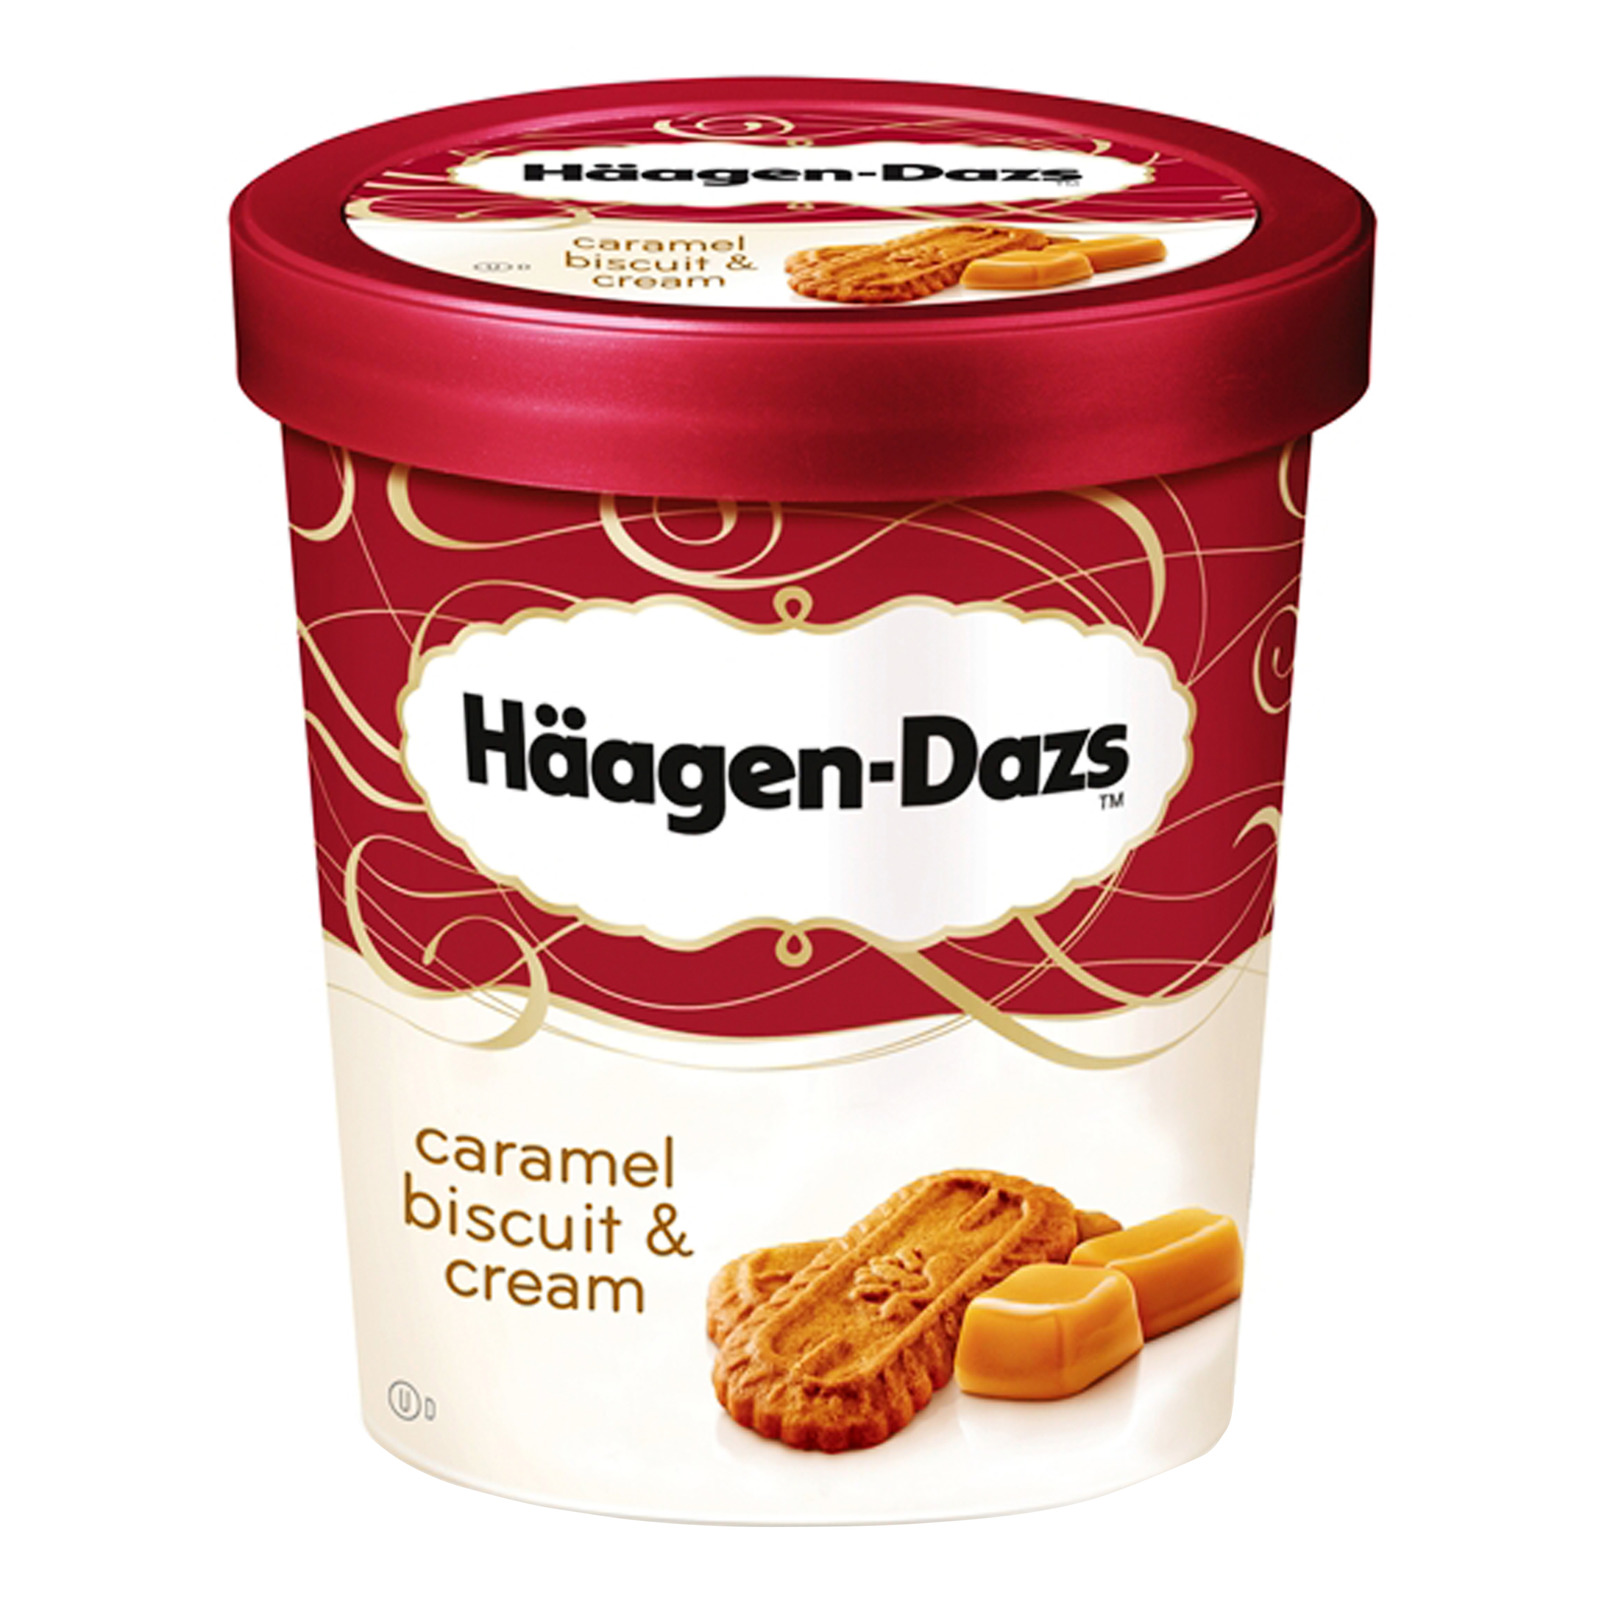 Haagen-Dazs Ice Cream - Caramel Biscuit & Cream